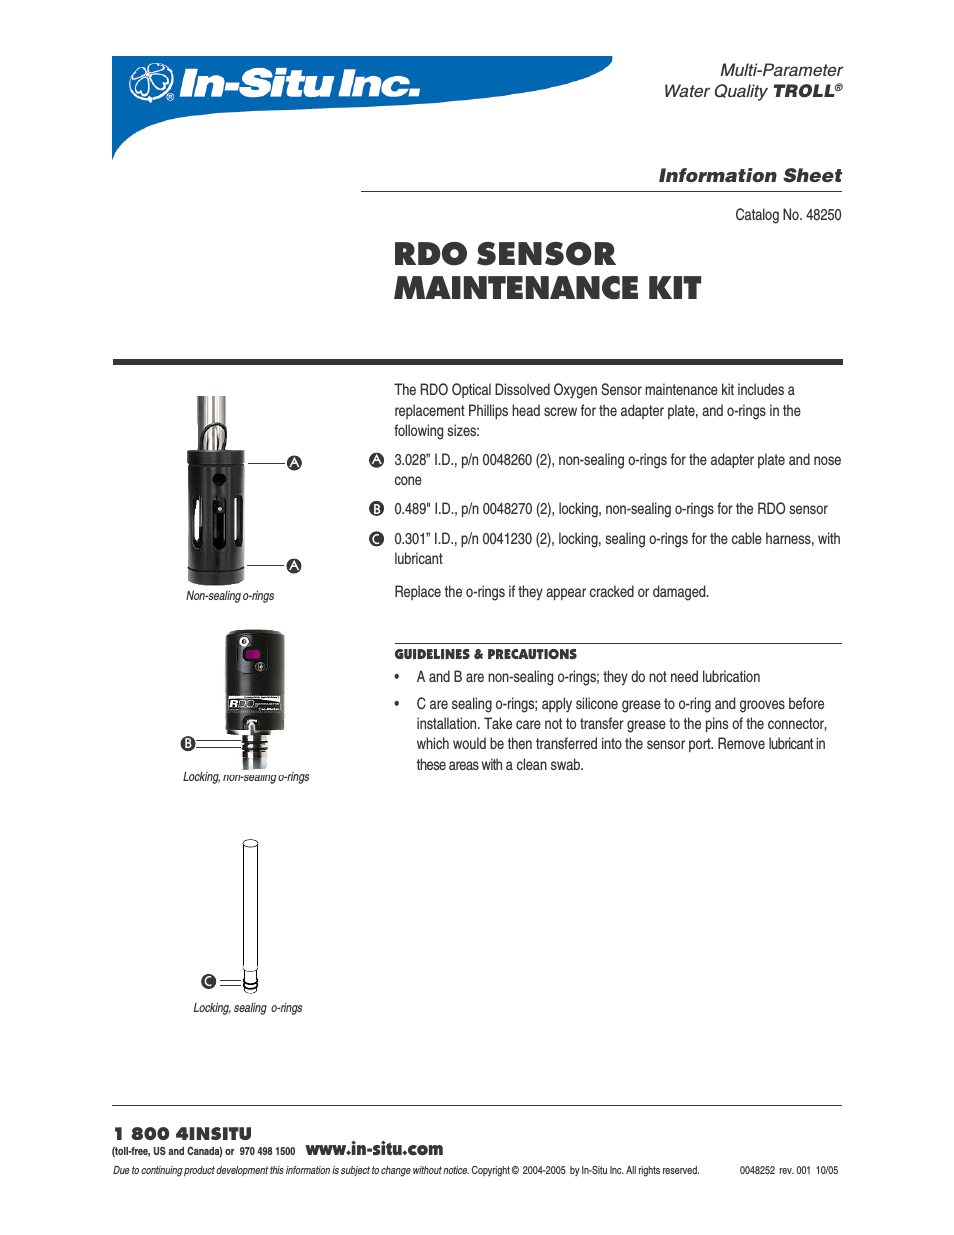 Dissolved Oxygen: RDO Sensor Calibration Kit for Cabled Sensors (purchased before 09/2008)